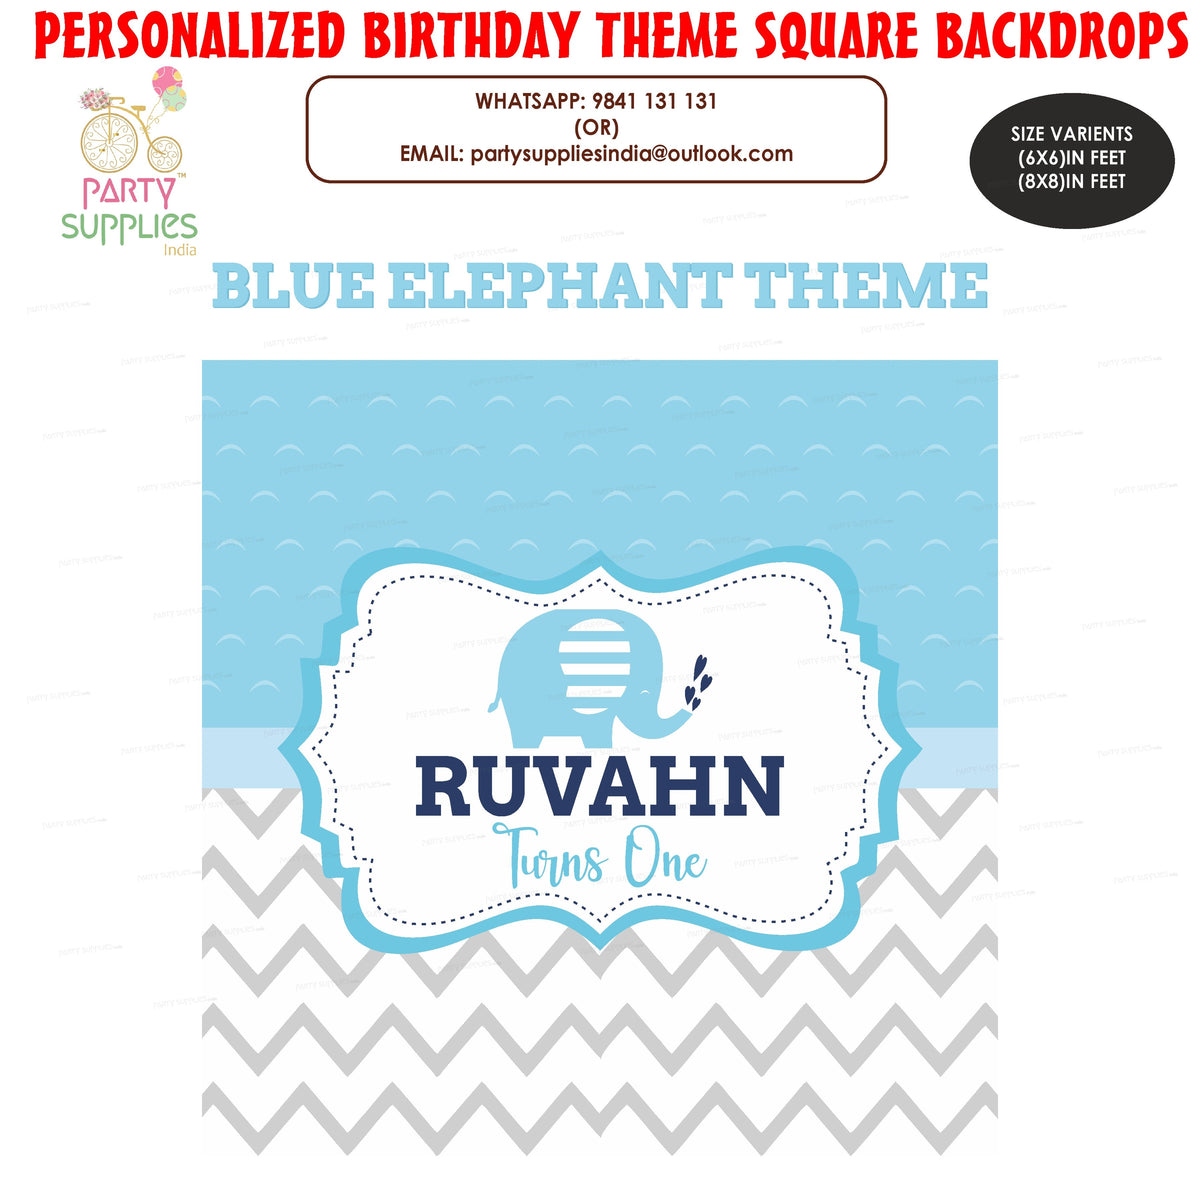 PSI Blue Elephant Theme Customized Square Backdrop Backdrop